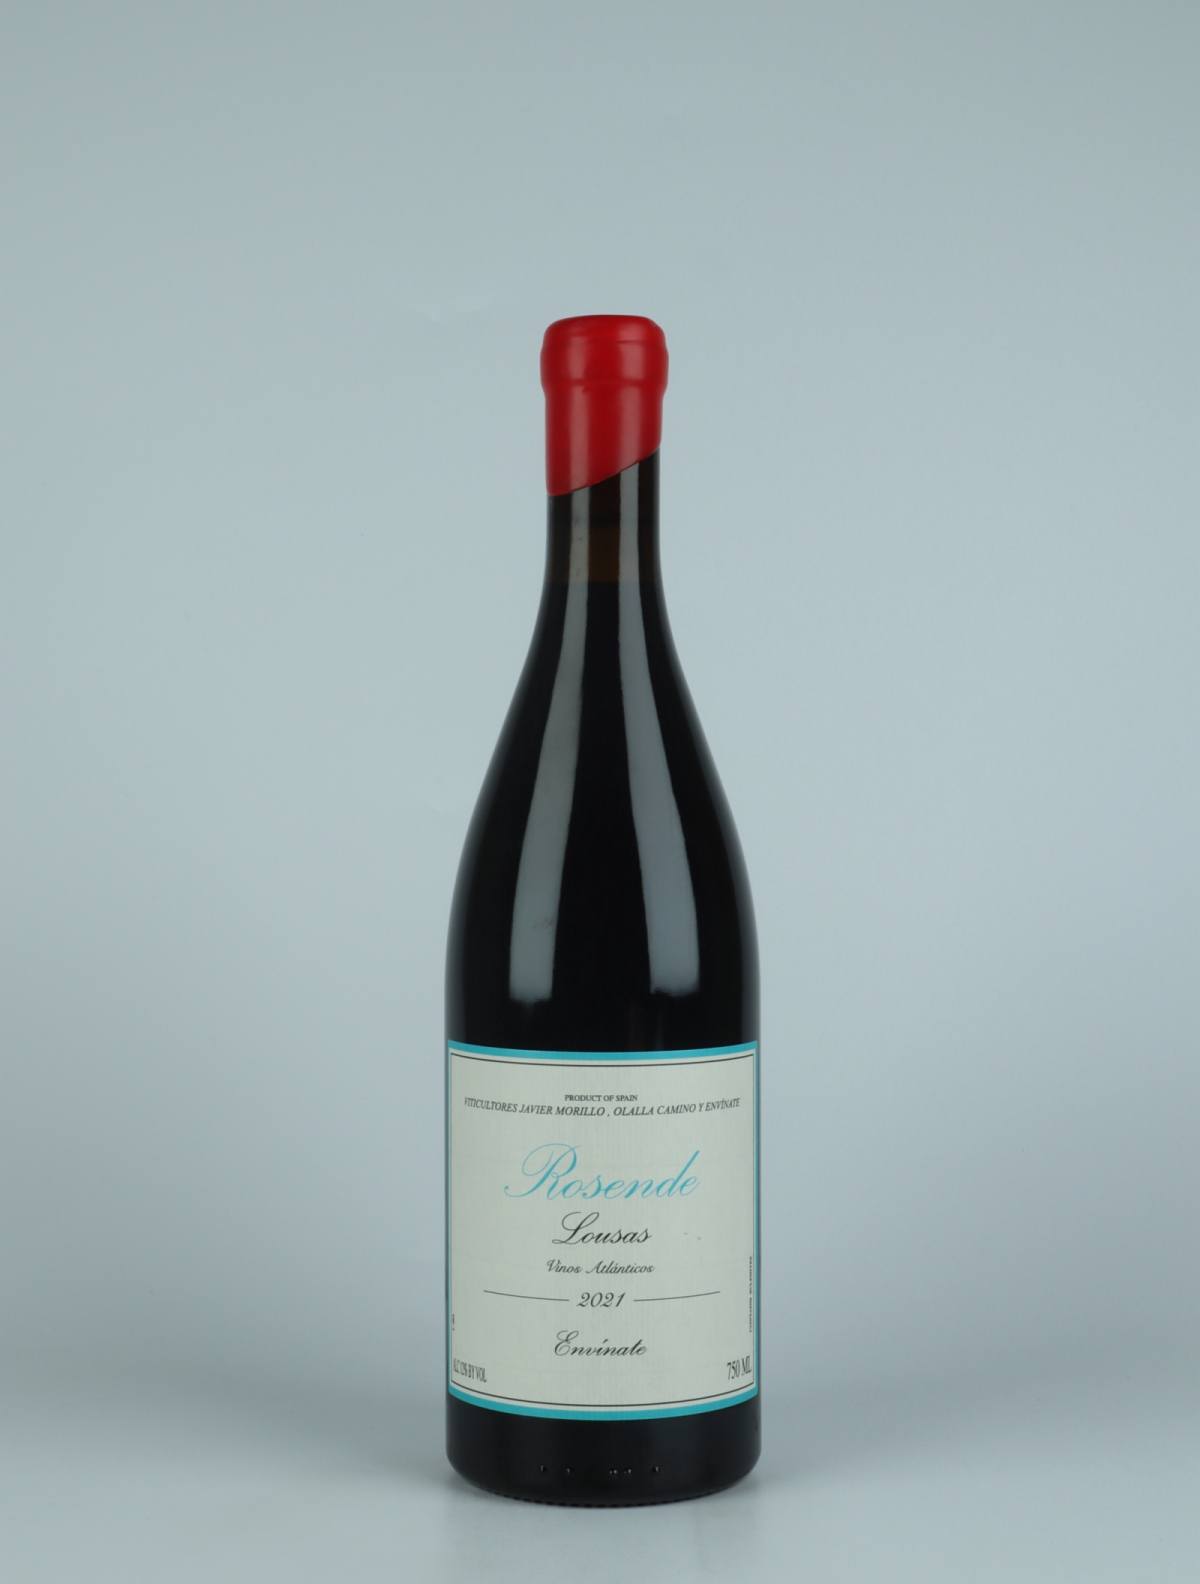 A bottle 2021 Rosende - Ribeira Sacra Red wine from Envínate, Ribeira Sacra in Spain